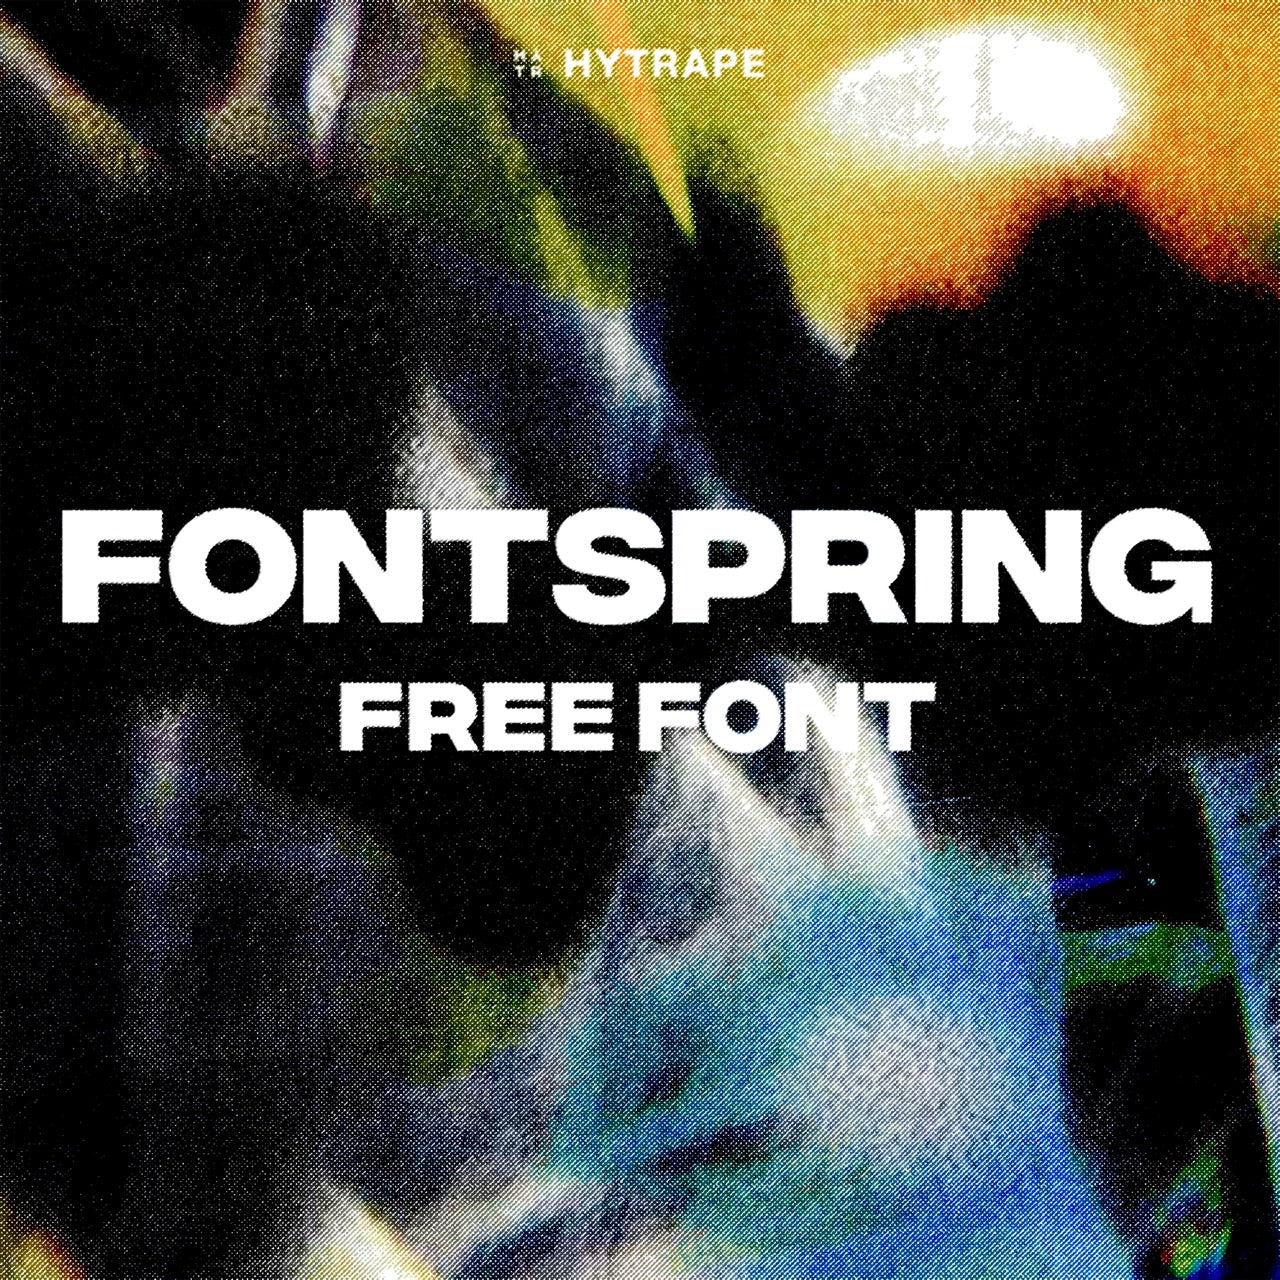 FONTSPRING FONT (FREE) HYTRAPE